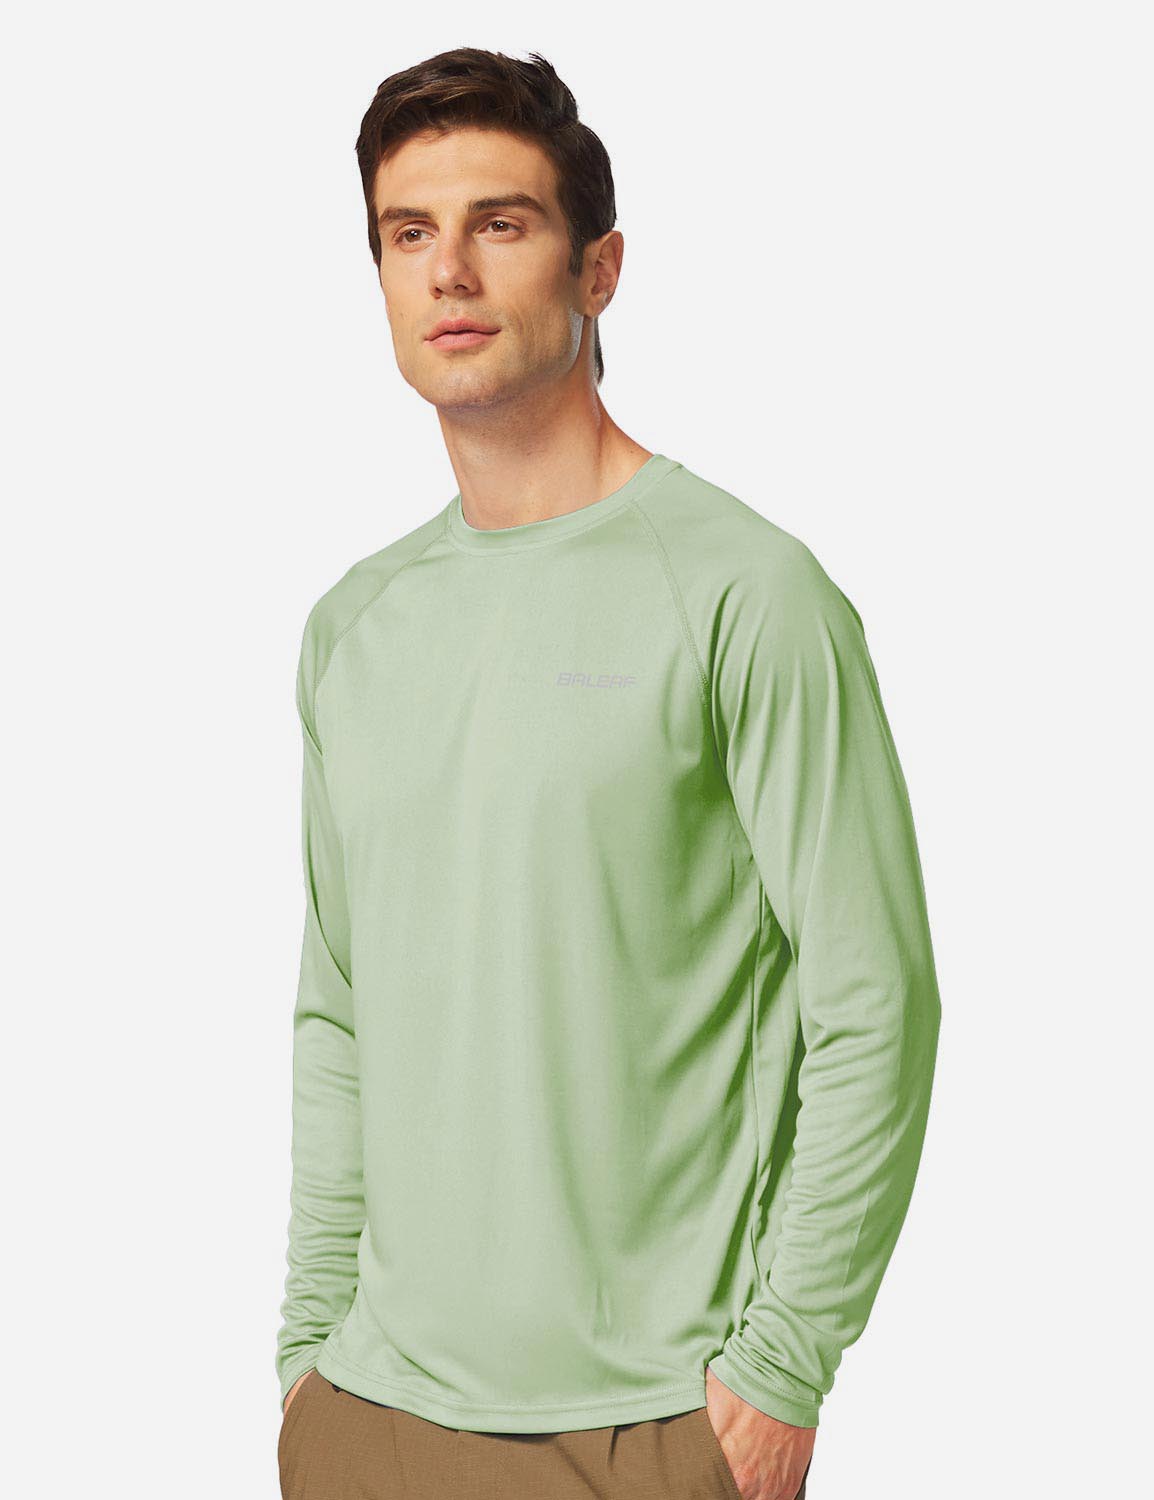 Baleaf Men's UPF50+ Long Sleeved Loose Fit Casual T-Shirt aga002 Pale Green Side